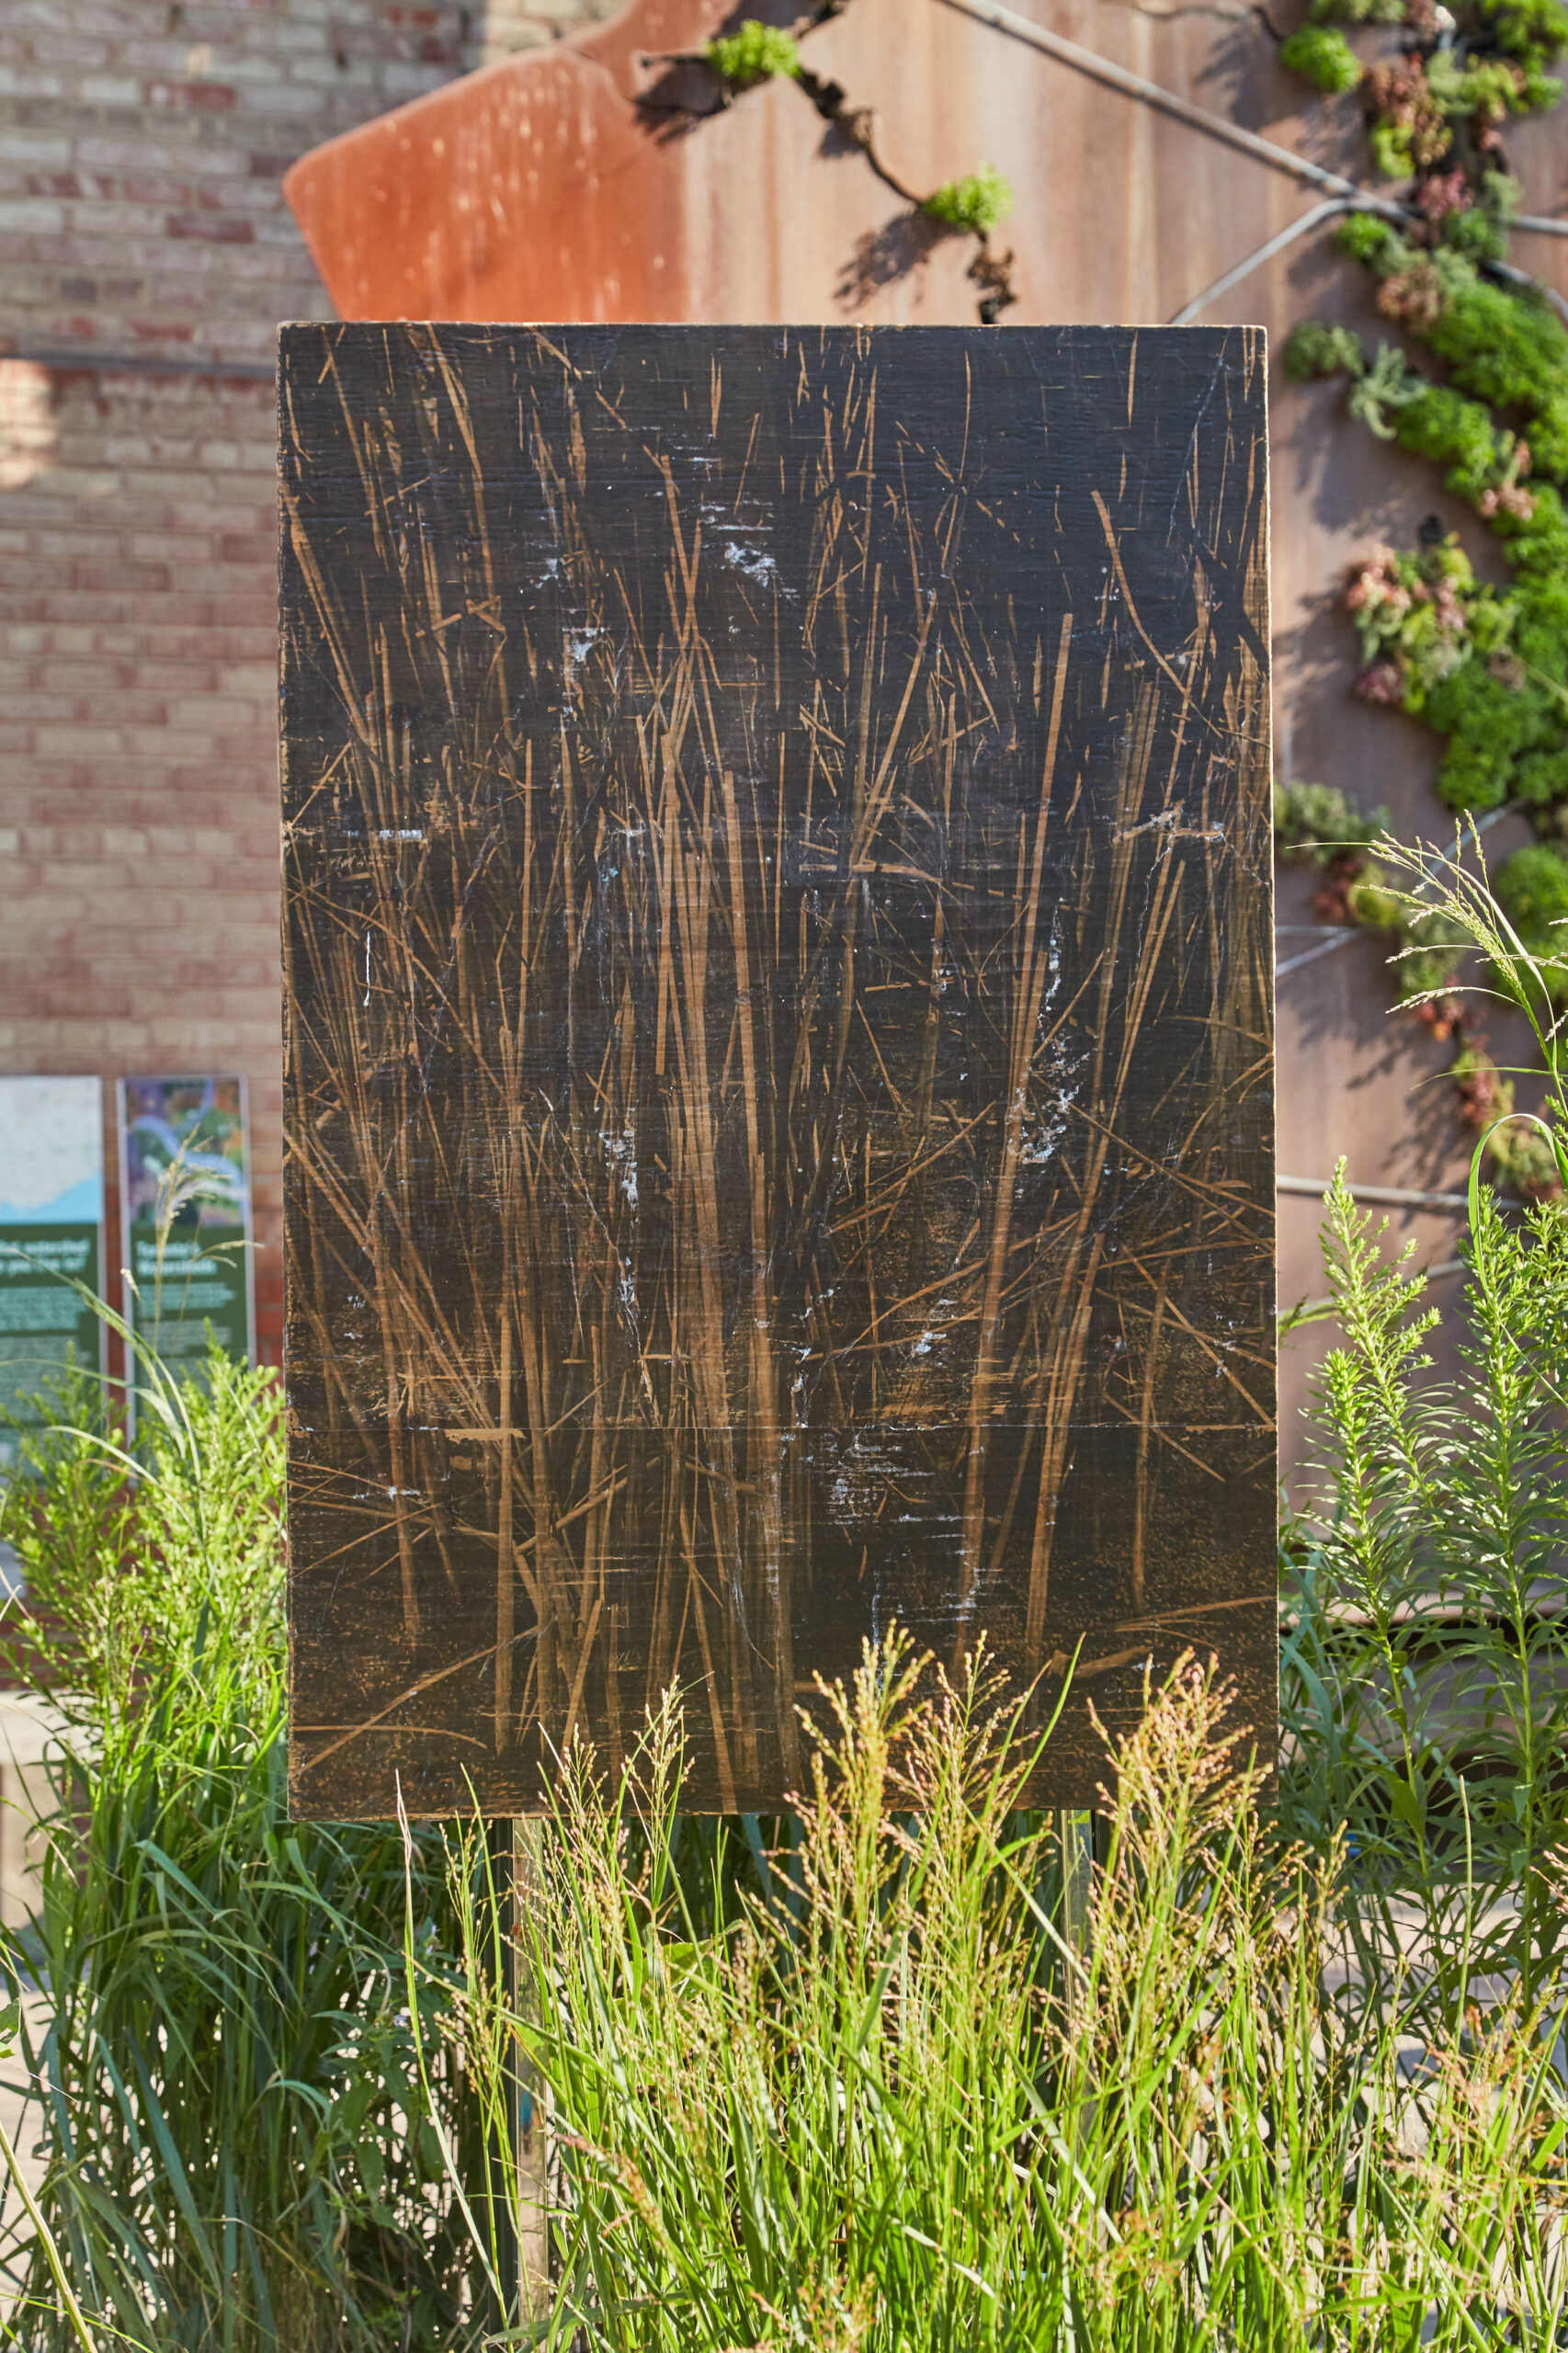     Sandra Brewster, Roots, installation view, Evergreen Brick Works, Toronto 2022. Courtesy of the artist and Evergreen Brick Works. Photo: Ibrahim Abusitta

